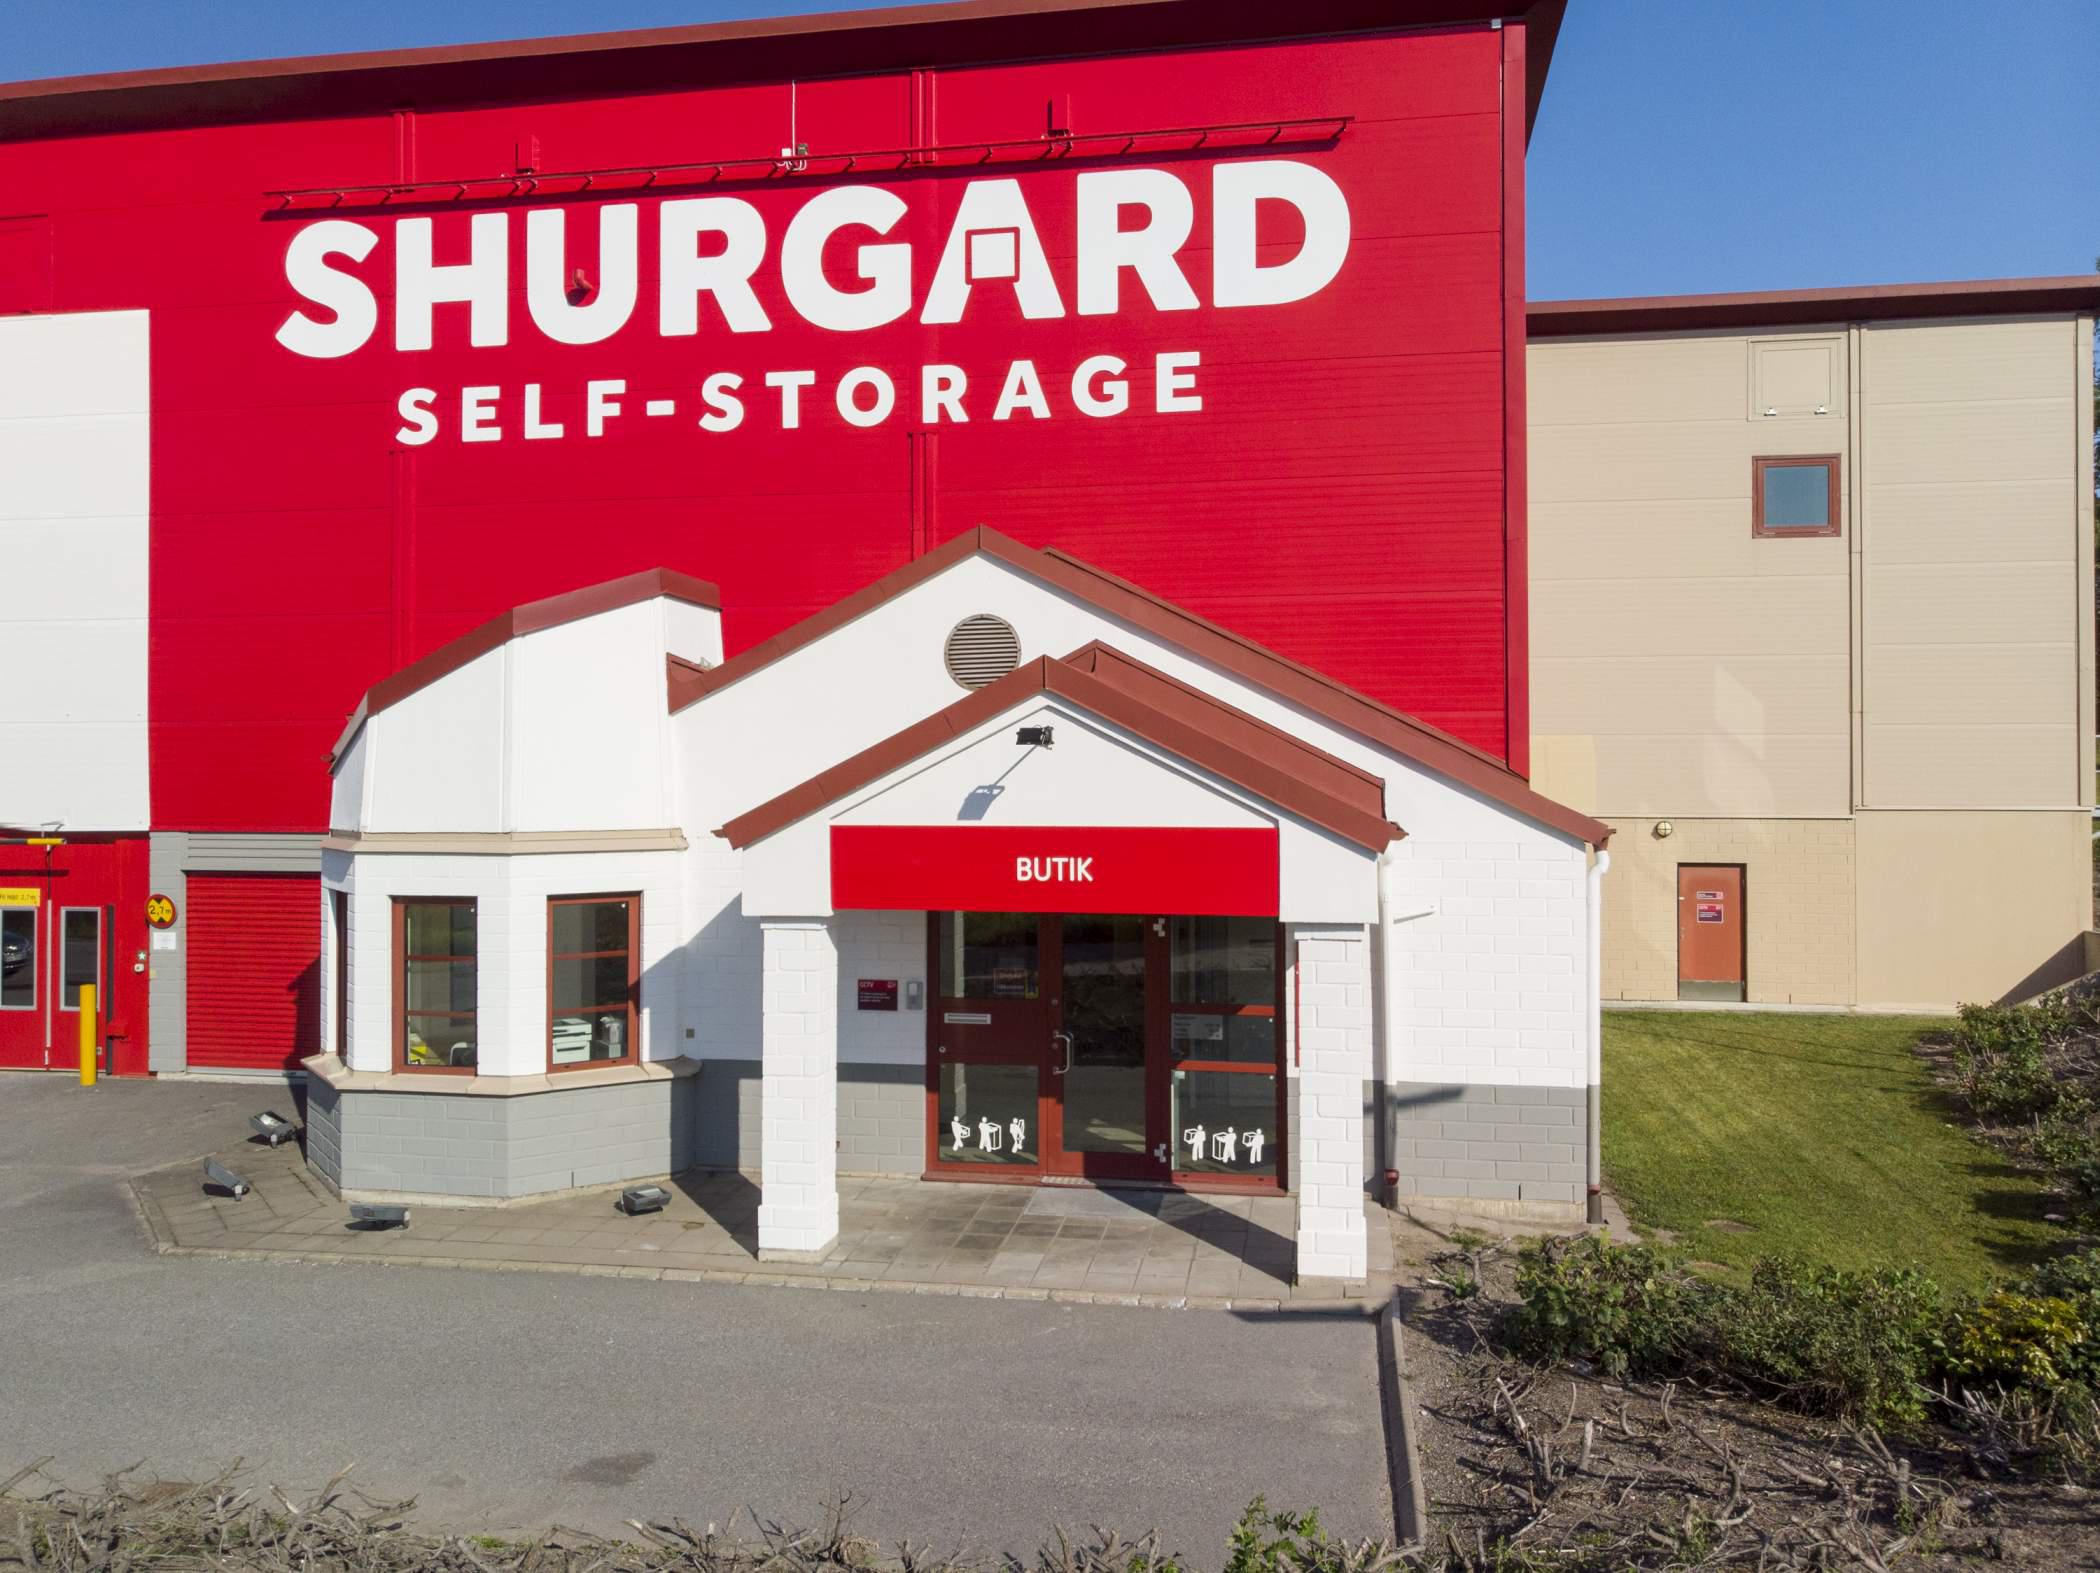 Images Shurgard Self Storage Upplands Väsby